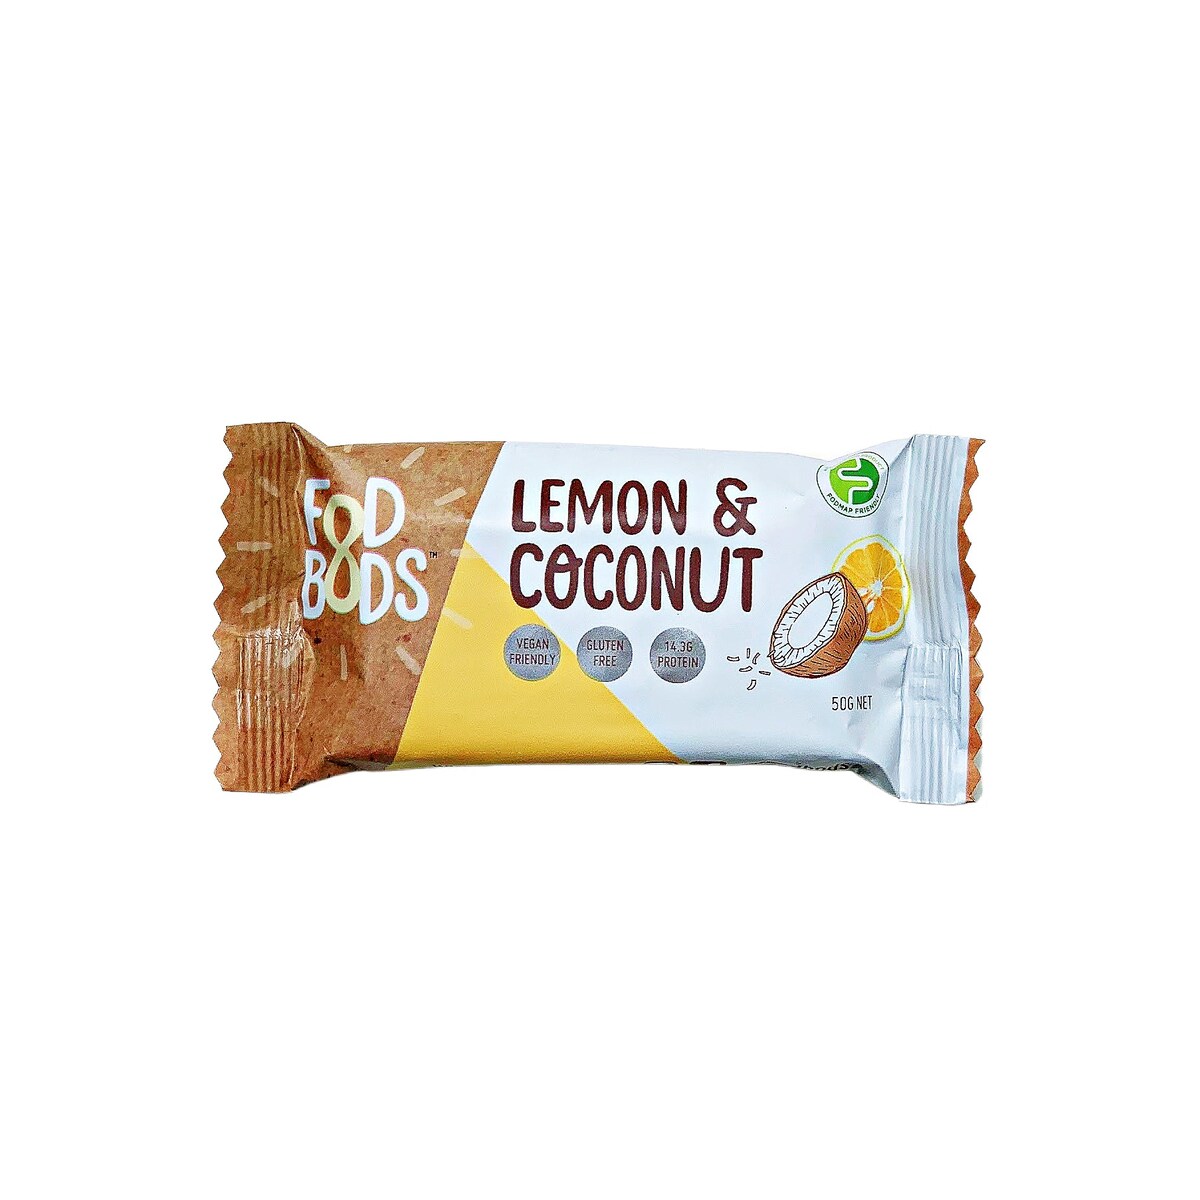 Fodbods Lemon & Coconut Bar 50G